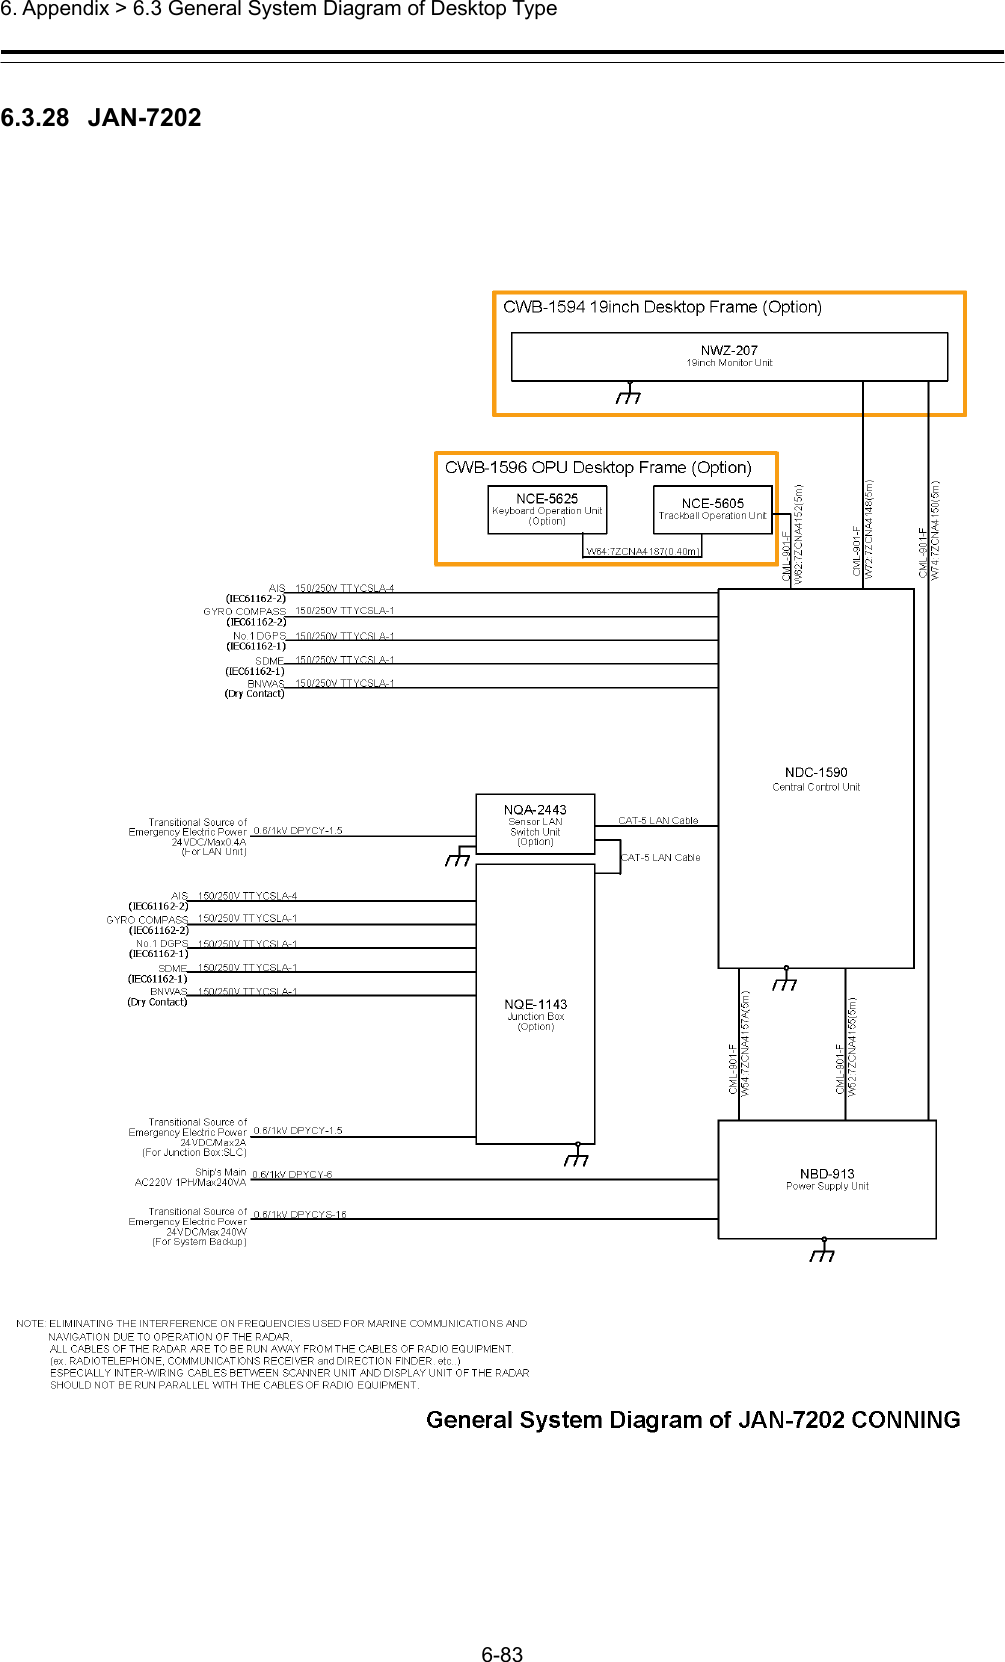  6. Appendix &gt; 6.3 General System Diagram of Desktop Type 6-83  6.3.28  JAN-7202  